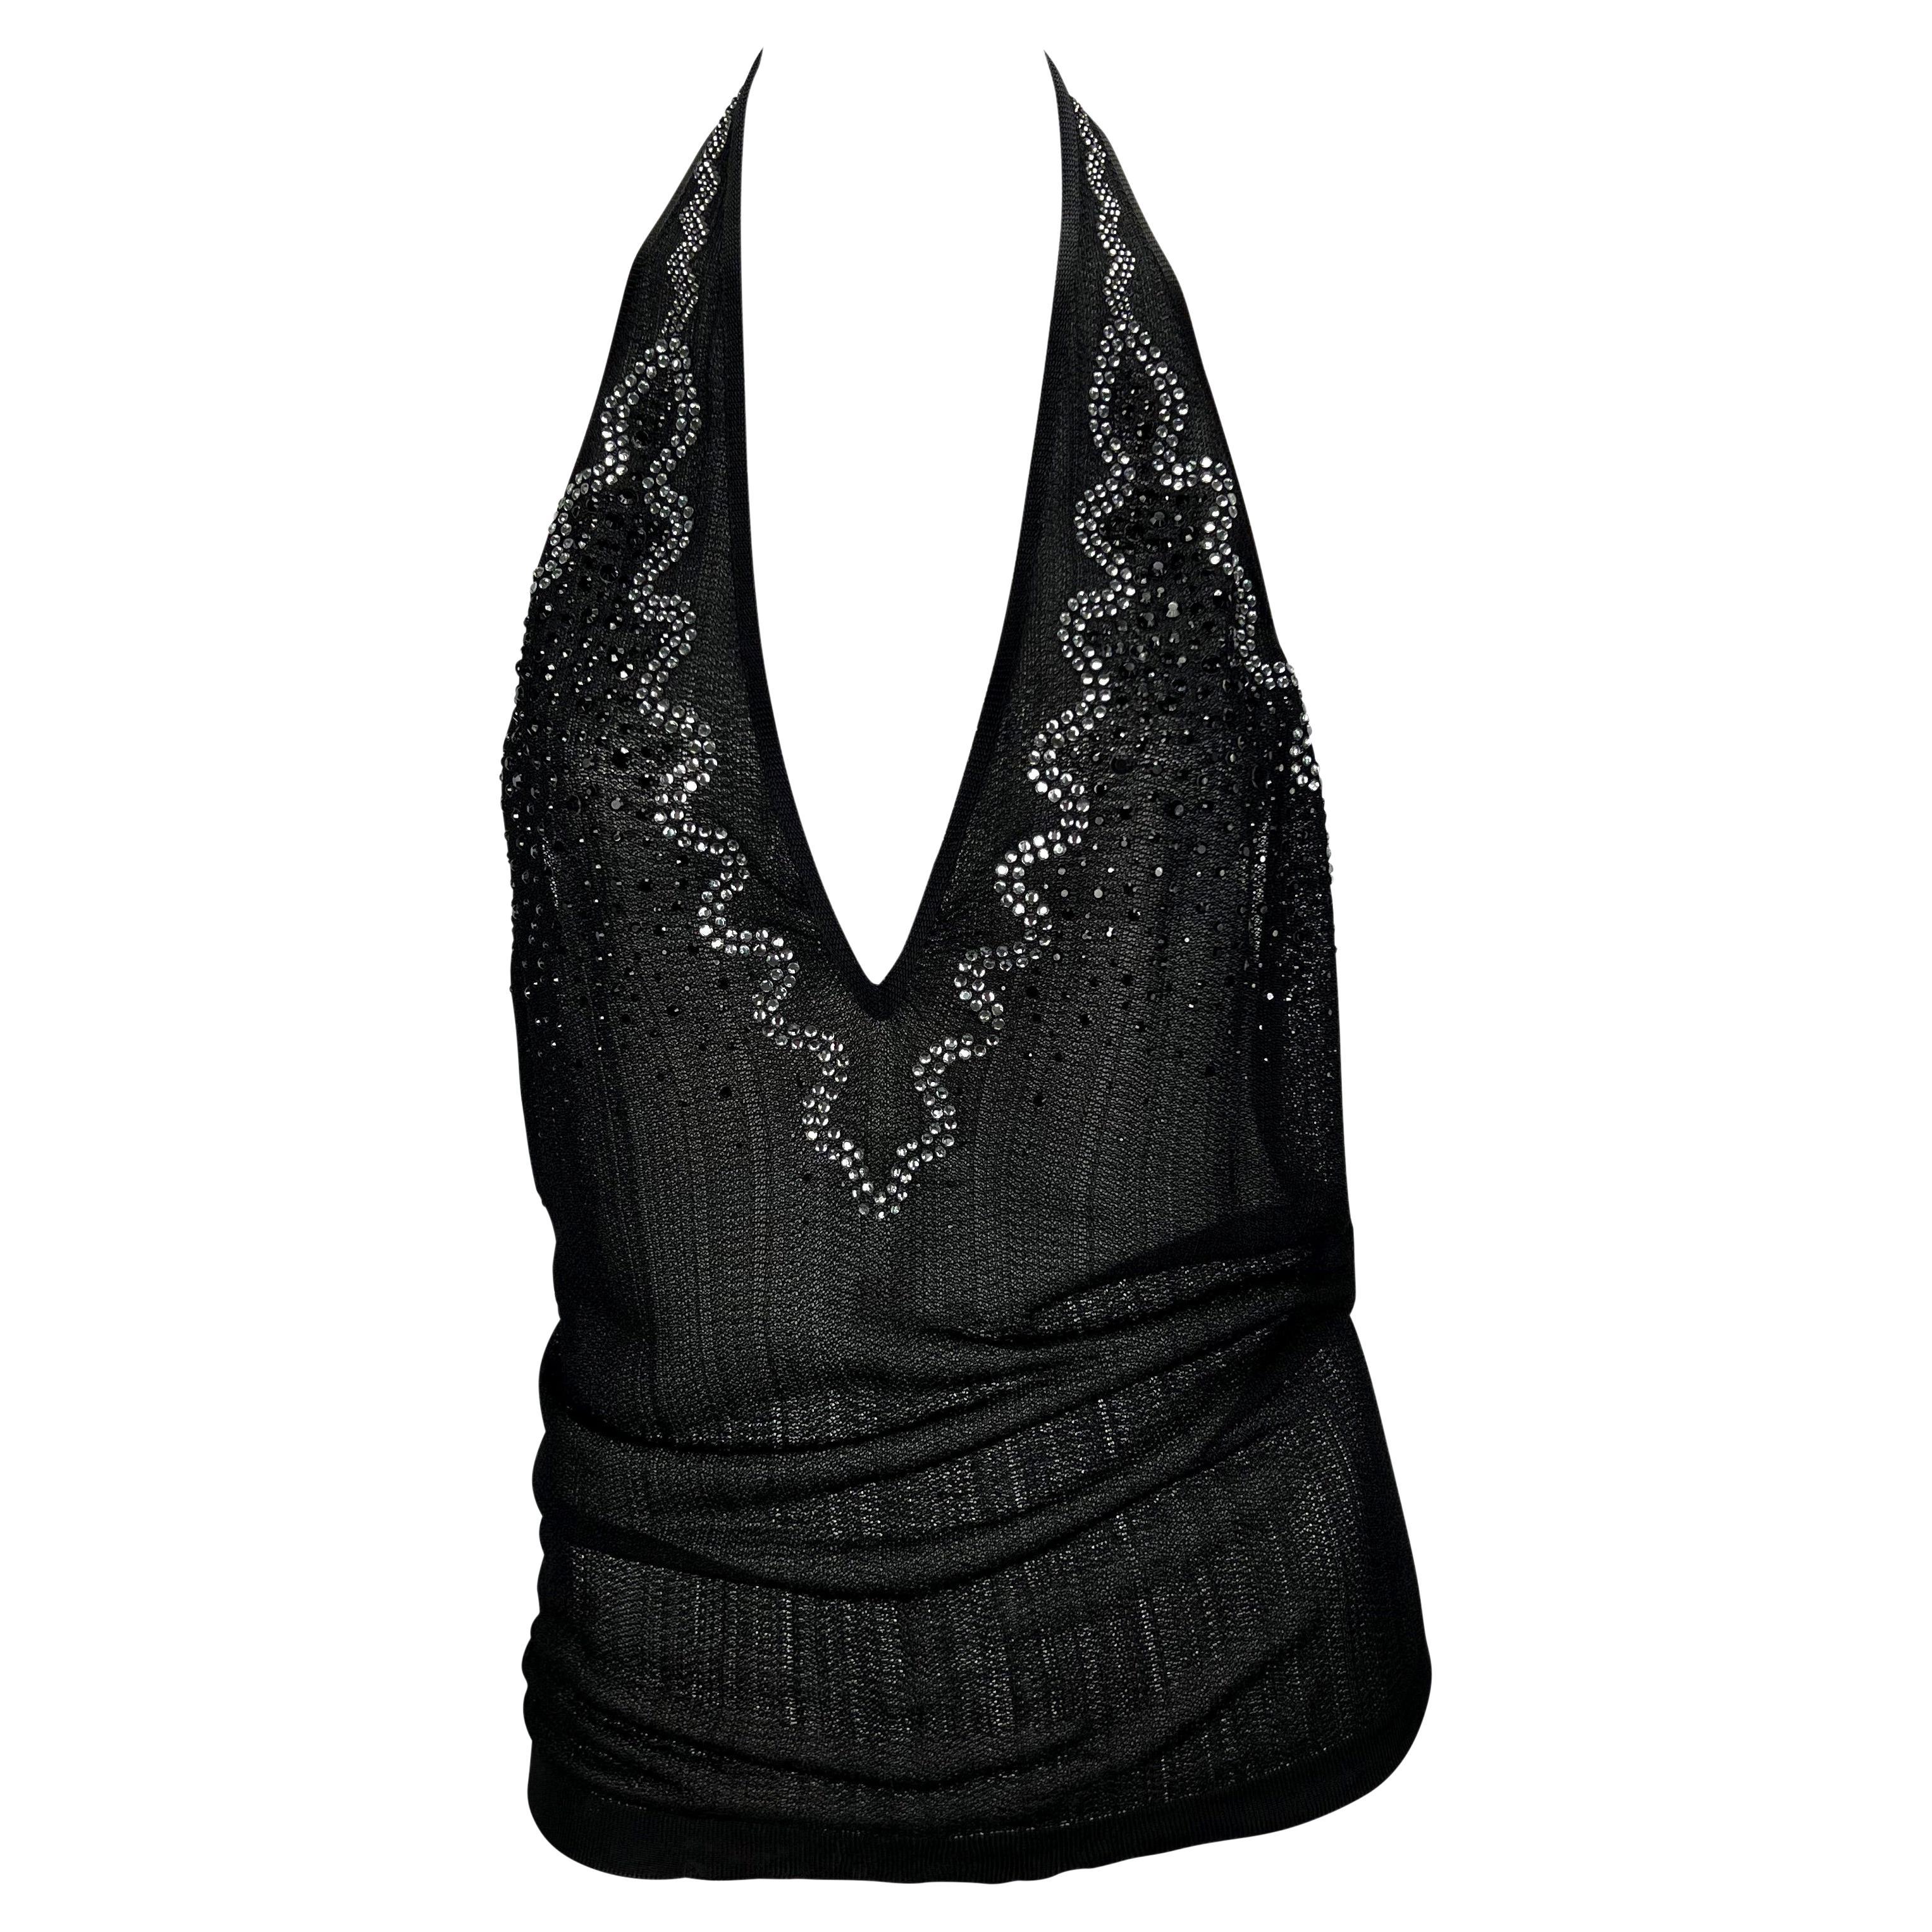 S/S 2005 Yves Saint Laurent Rhinestone Sheer Knit Viscose Halter Top For Sale